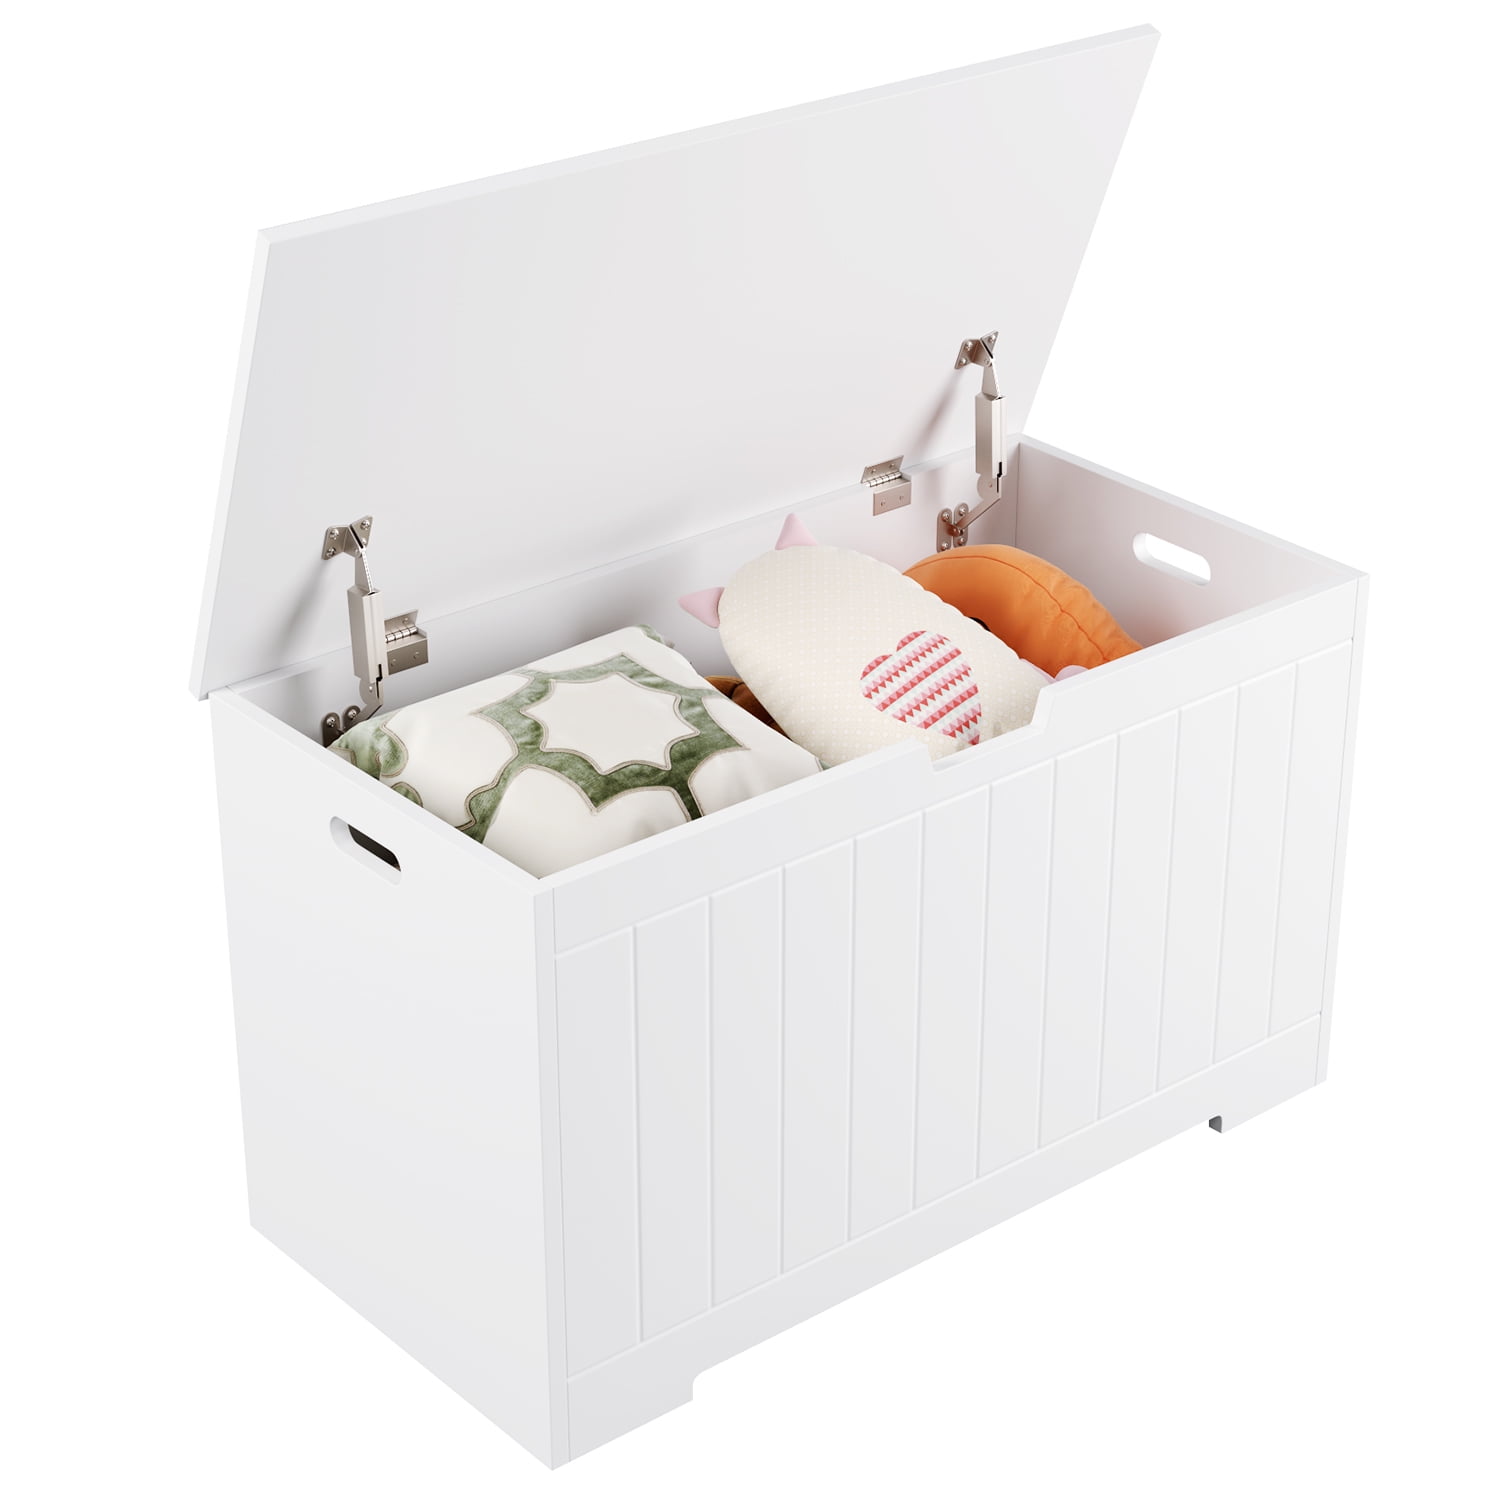 Large White Wooden Ottoman Toy Chest Bedding Blanket Storage Box Organiser For Children Room Bedroom 